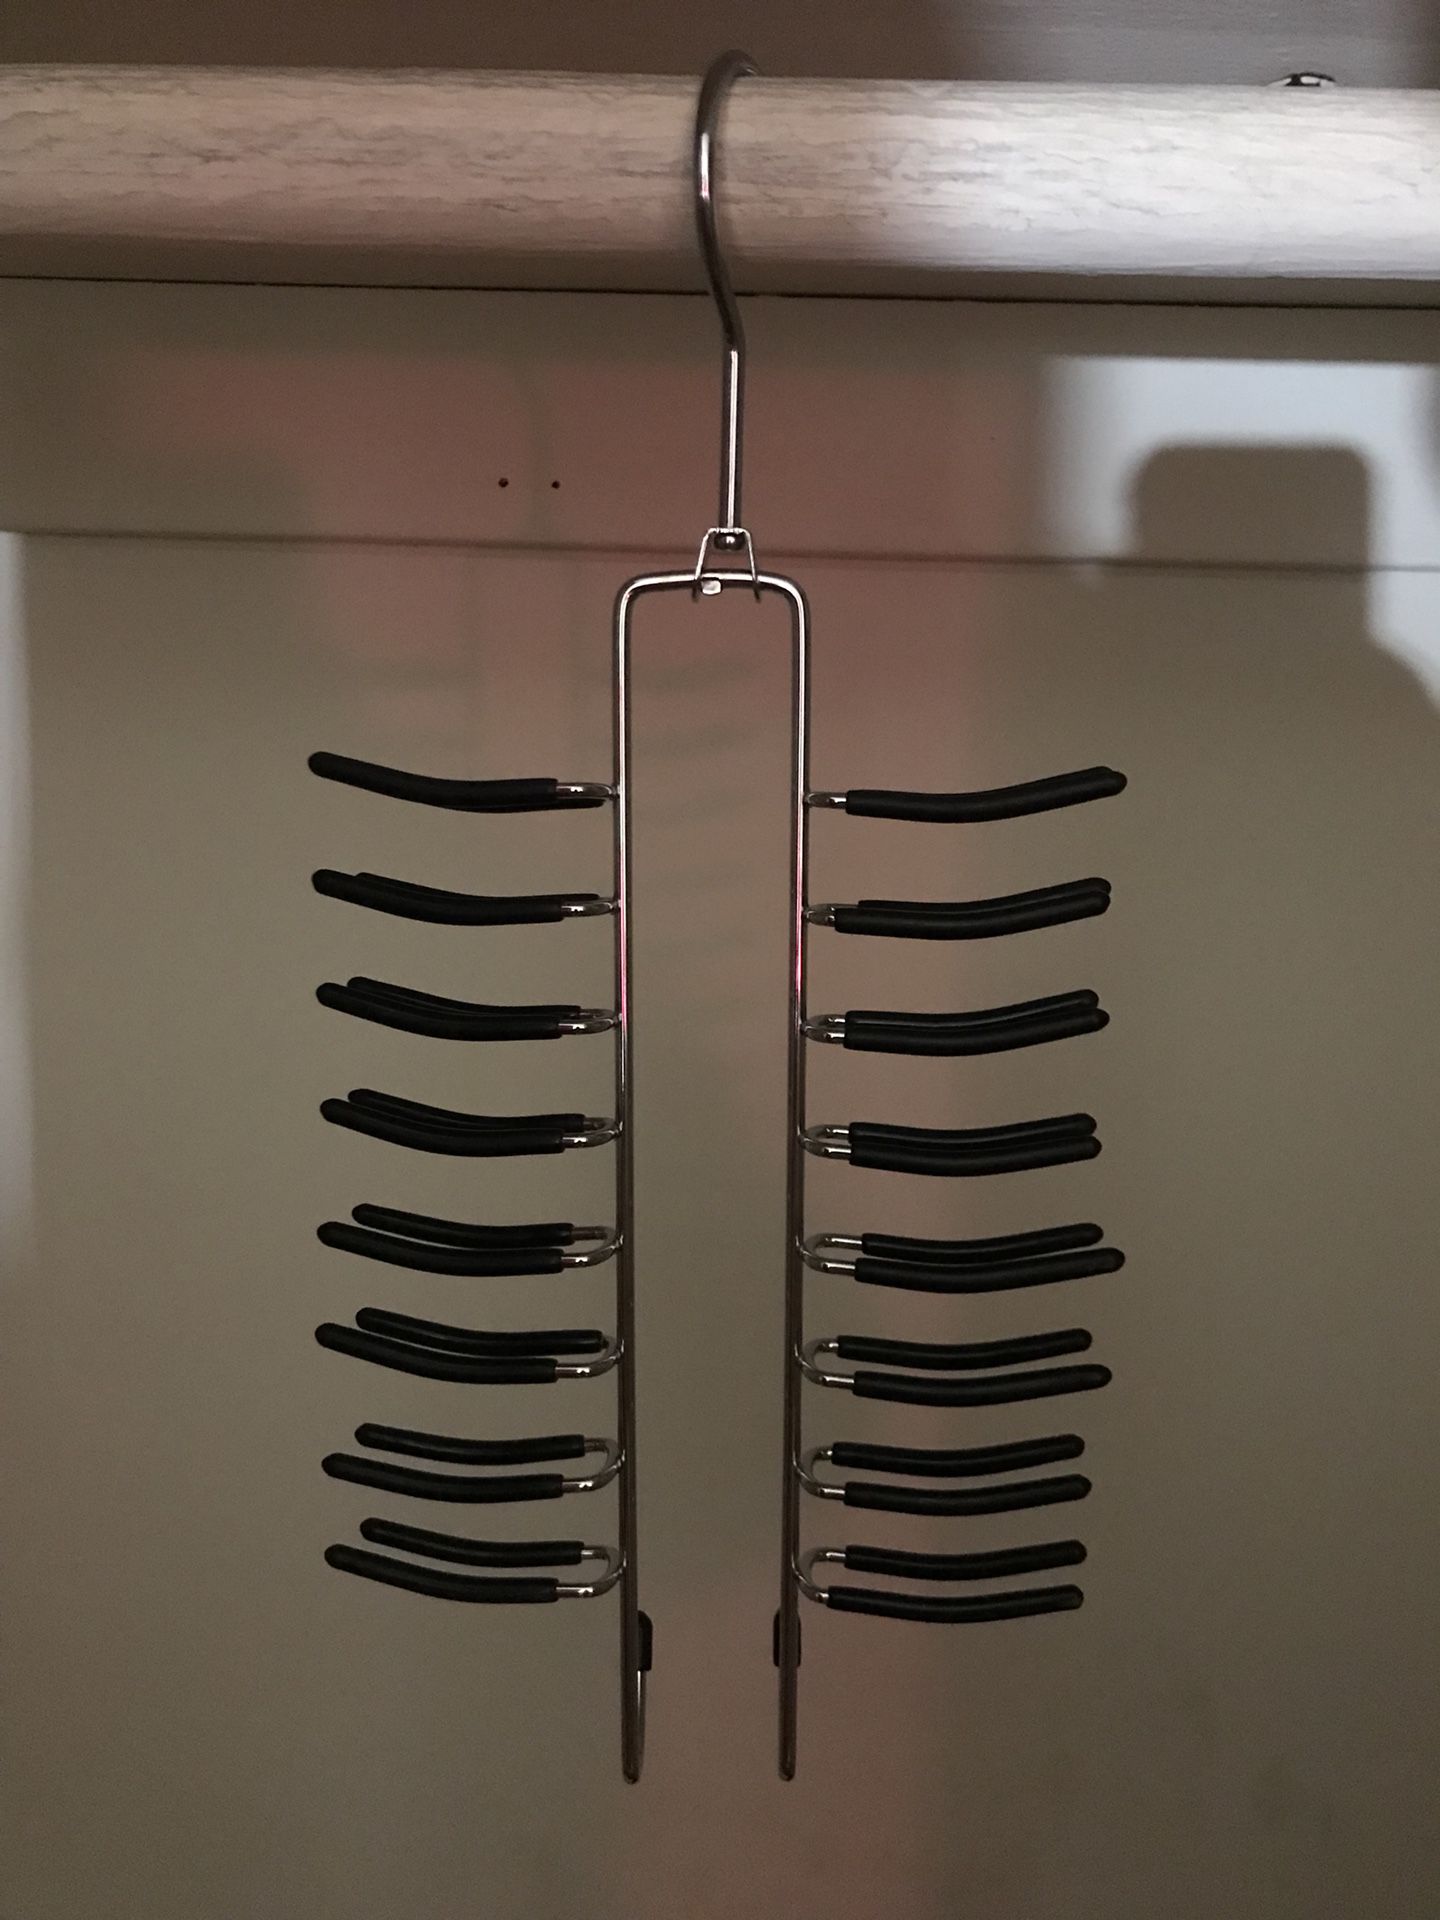 Accessory hanger